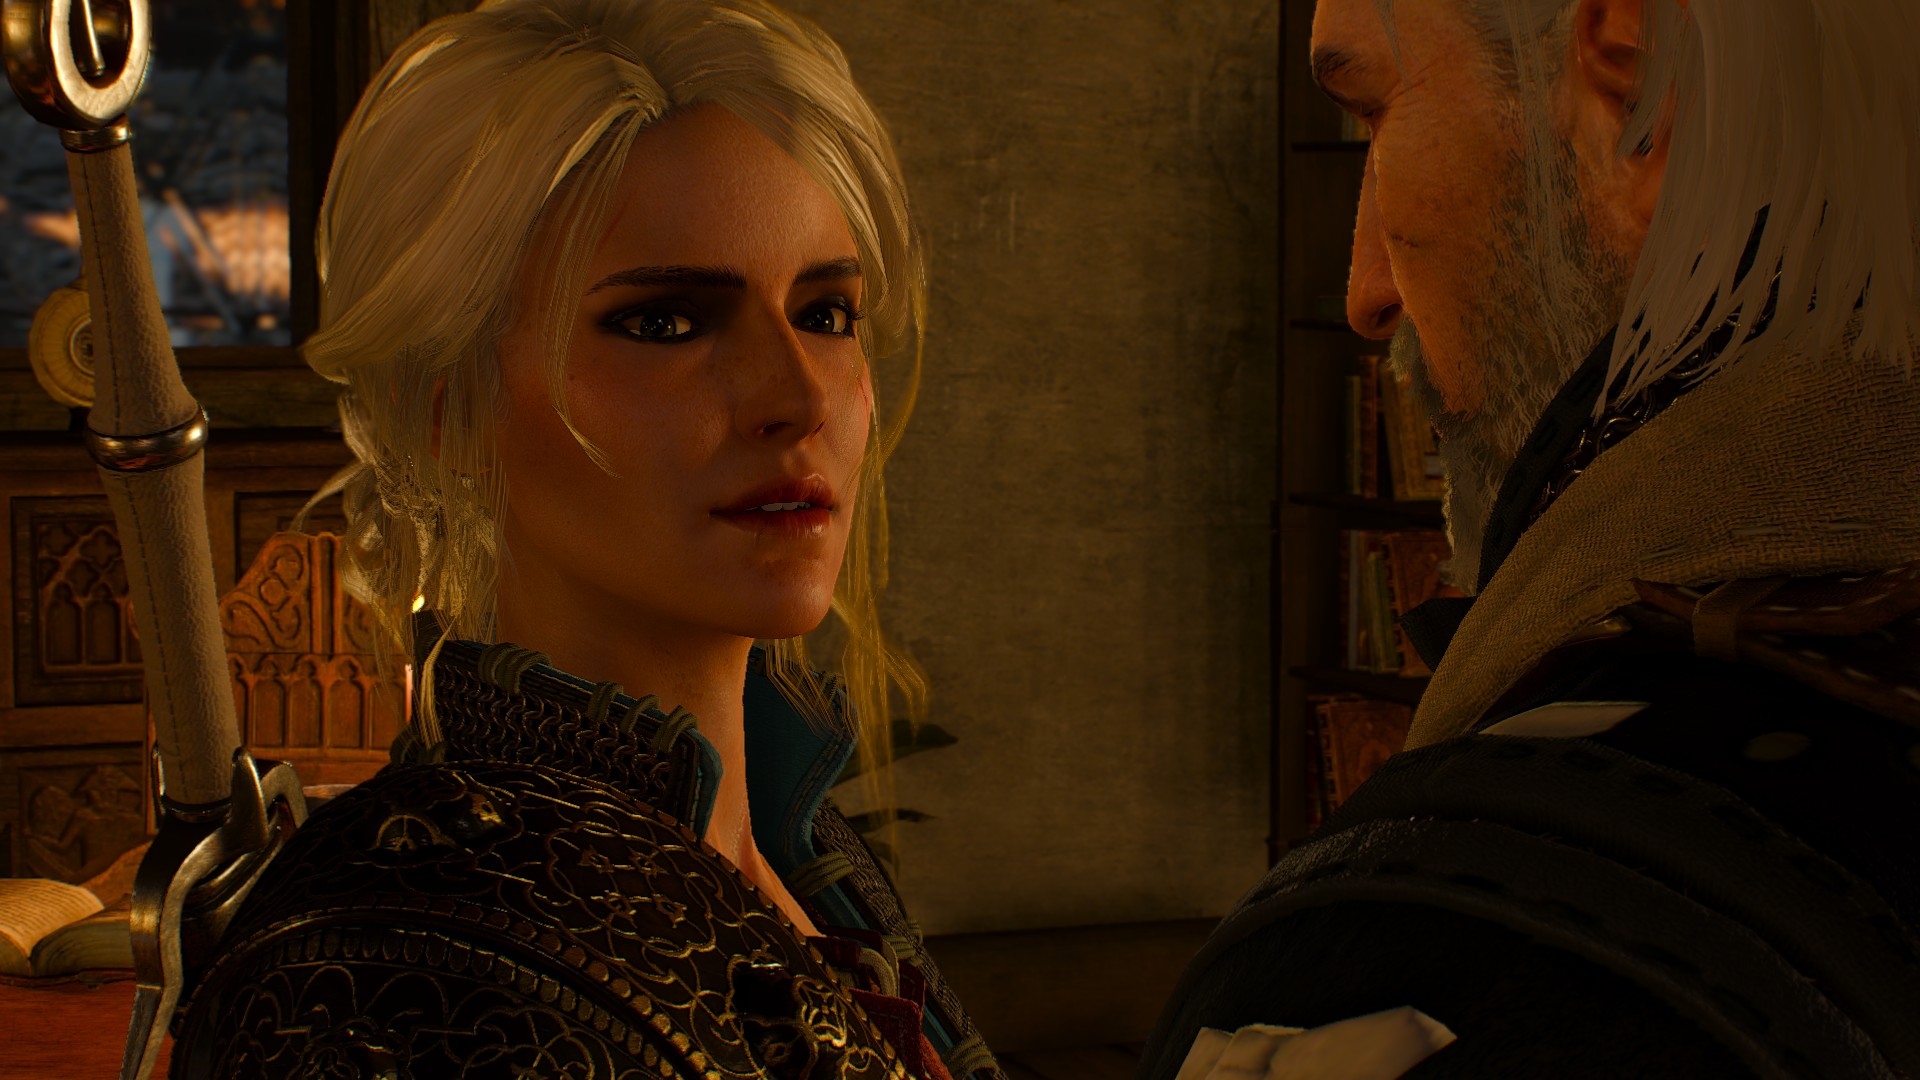 Geralt of Rivia, Cirilla Fiona Elen Riannon, The Witcher 3: Wild Hunt, Video games, CD Projekt RED, Ciri, The Witcher Wallpaper